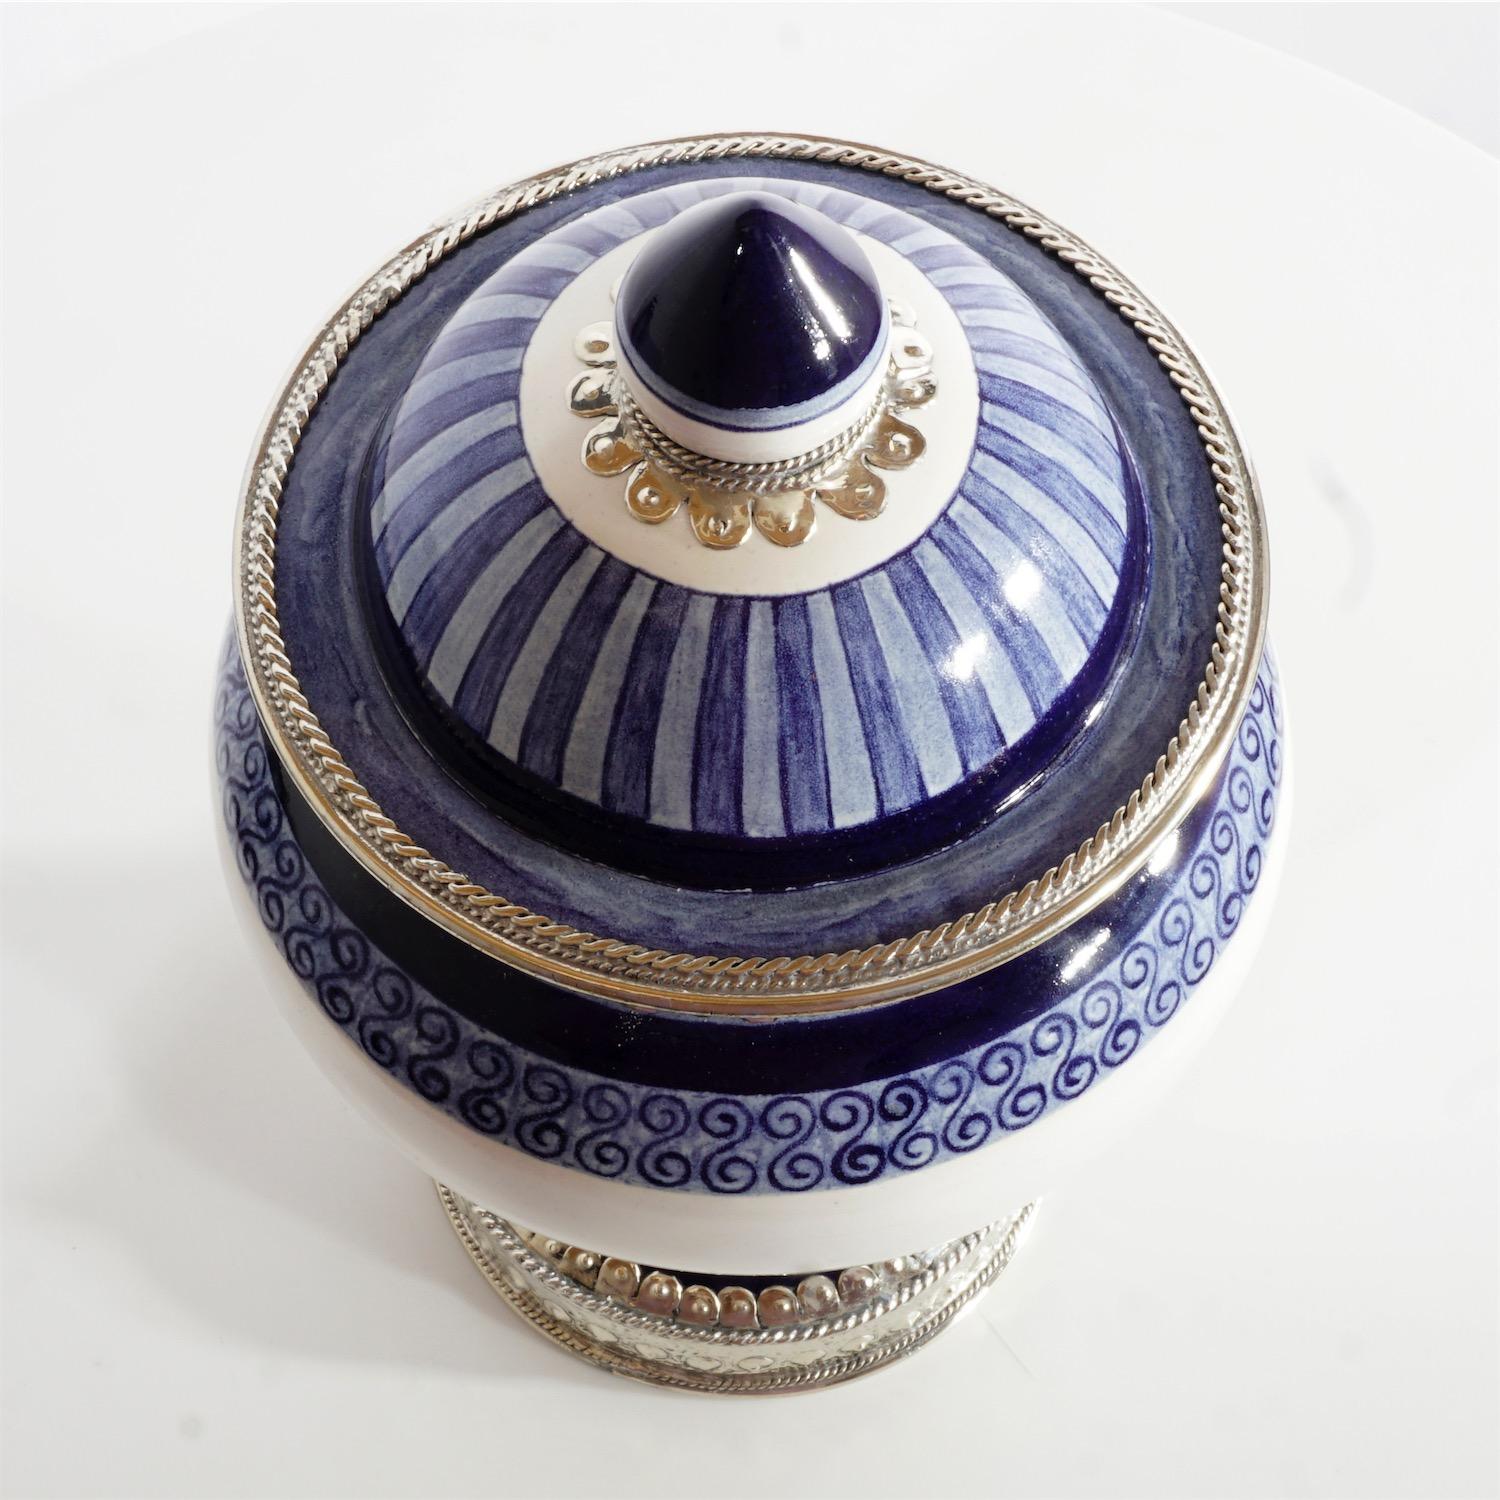 Other Blue and White Jar, Ceramic and White Metal ‘Alpaca’, Handmade